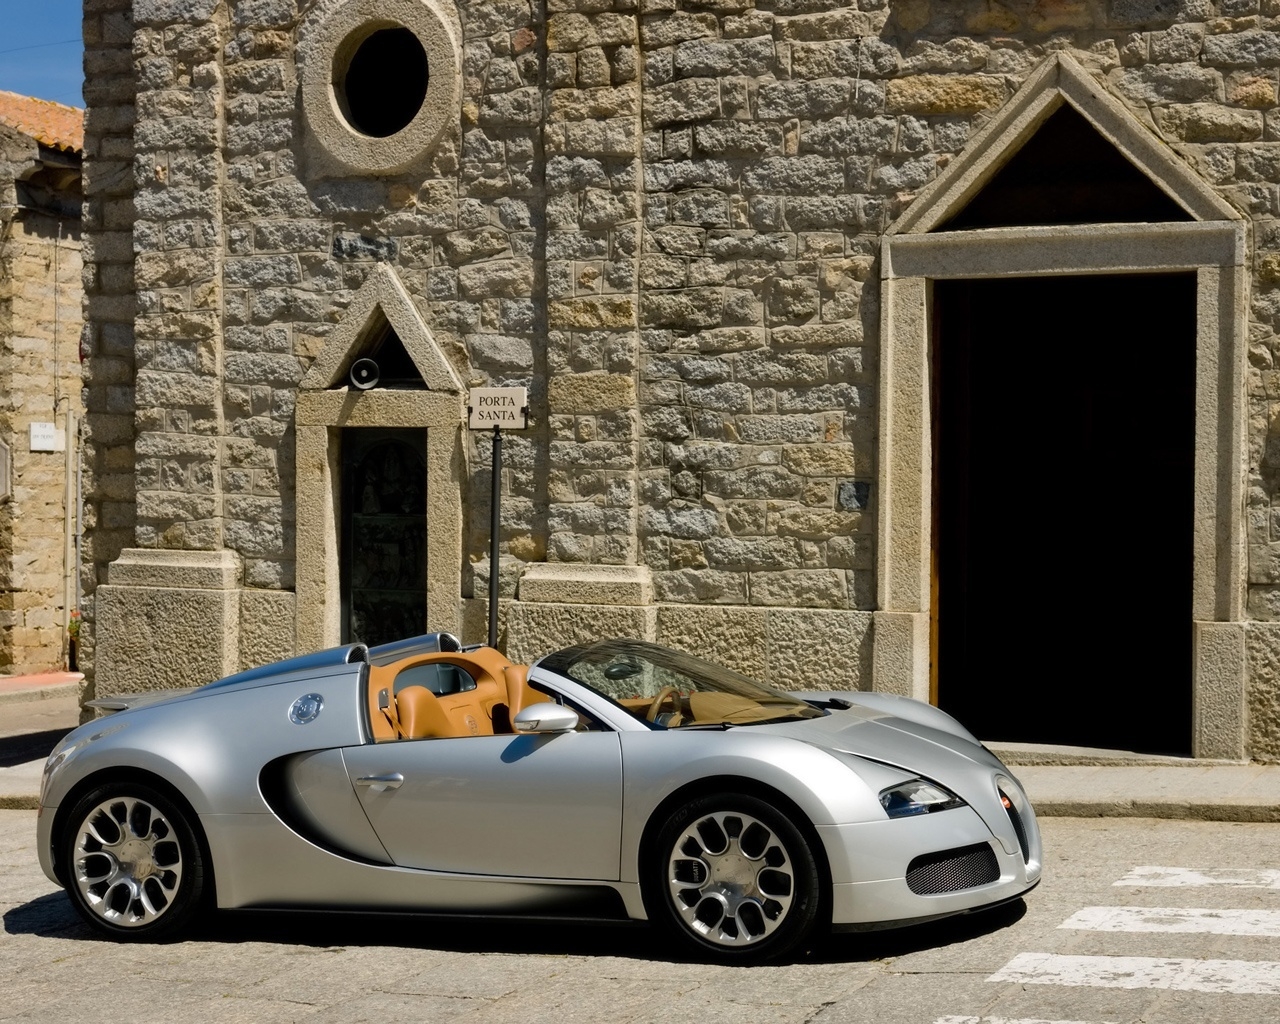 Bugatti Veyron 16.4 Grand Sport 2010 in Sardinia - Side 3 for 1280 x 1024 resolution